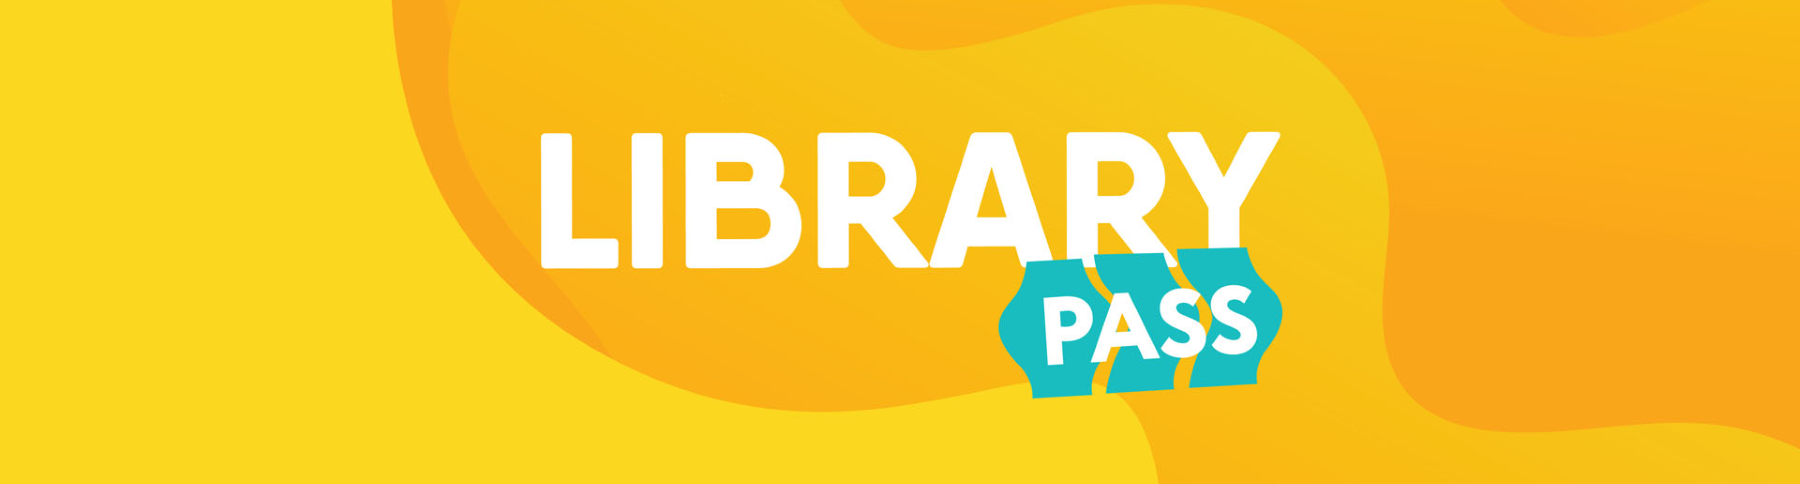 Brodart Offers Comics Plus to Public & Academic Libraries - LibraryPass™